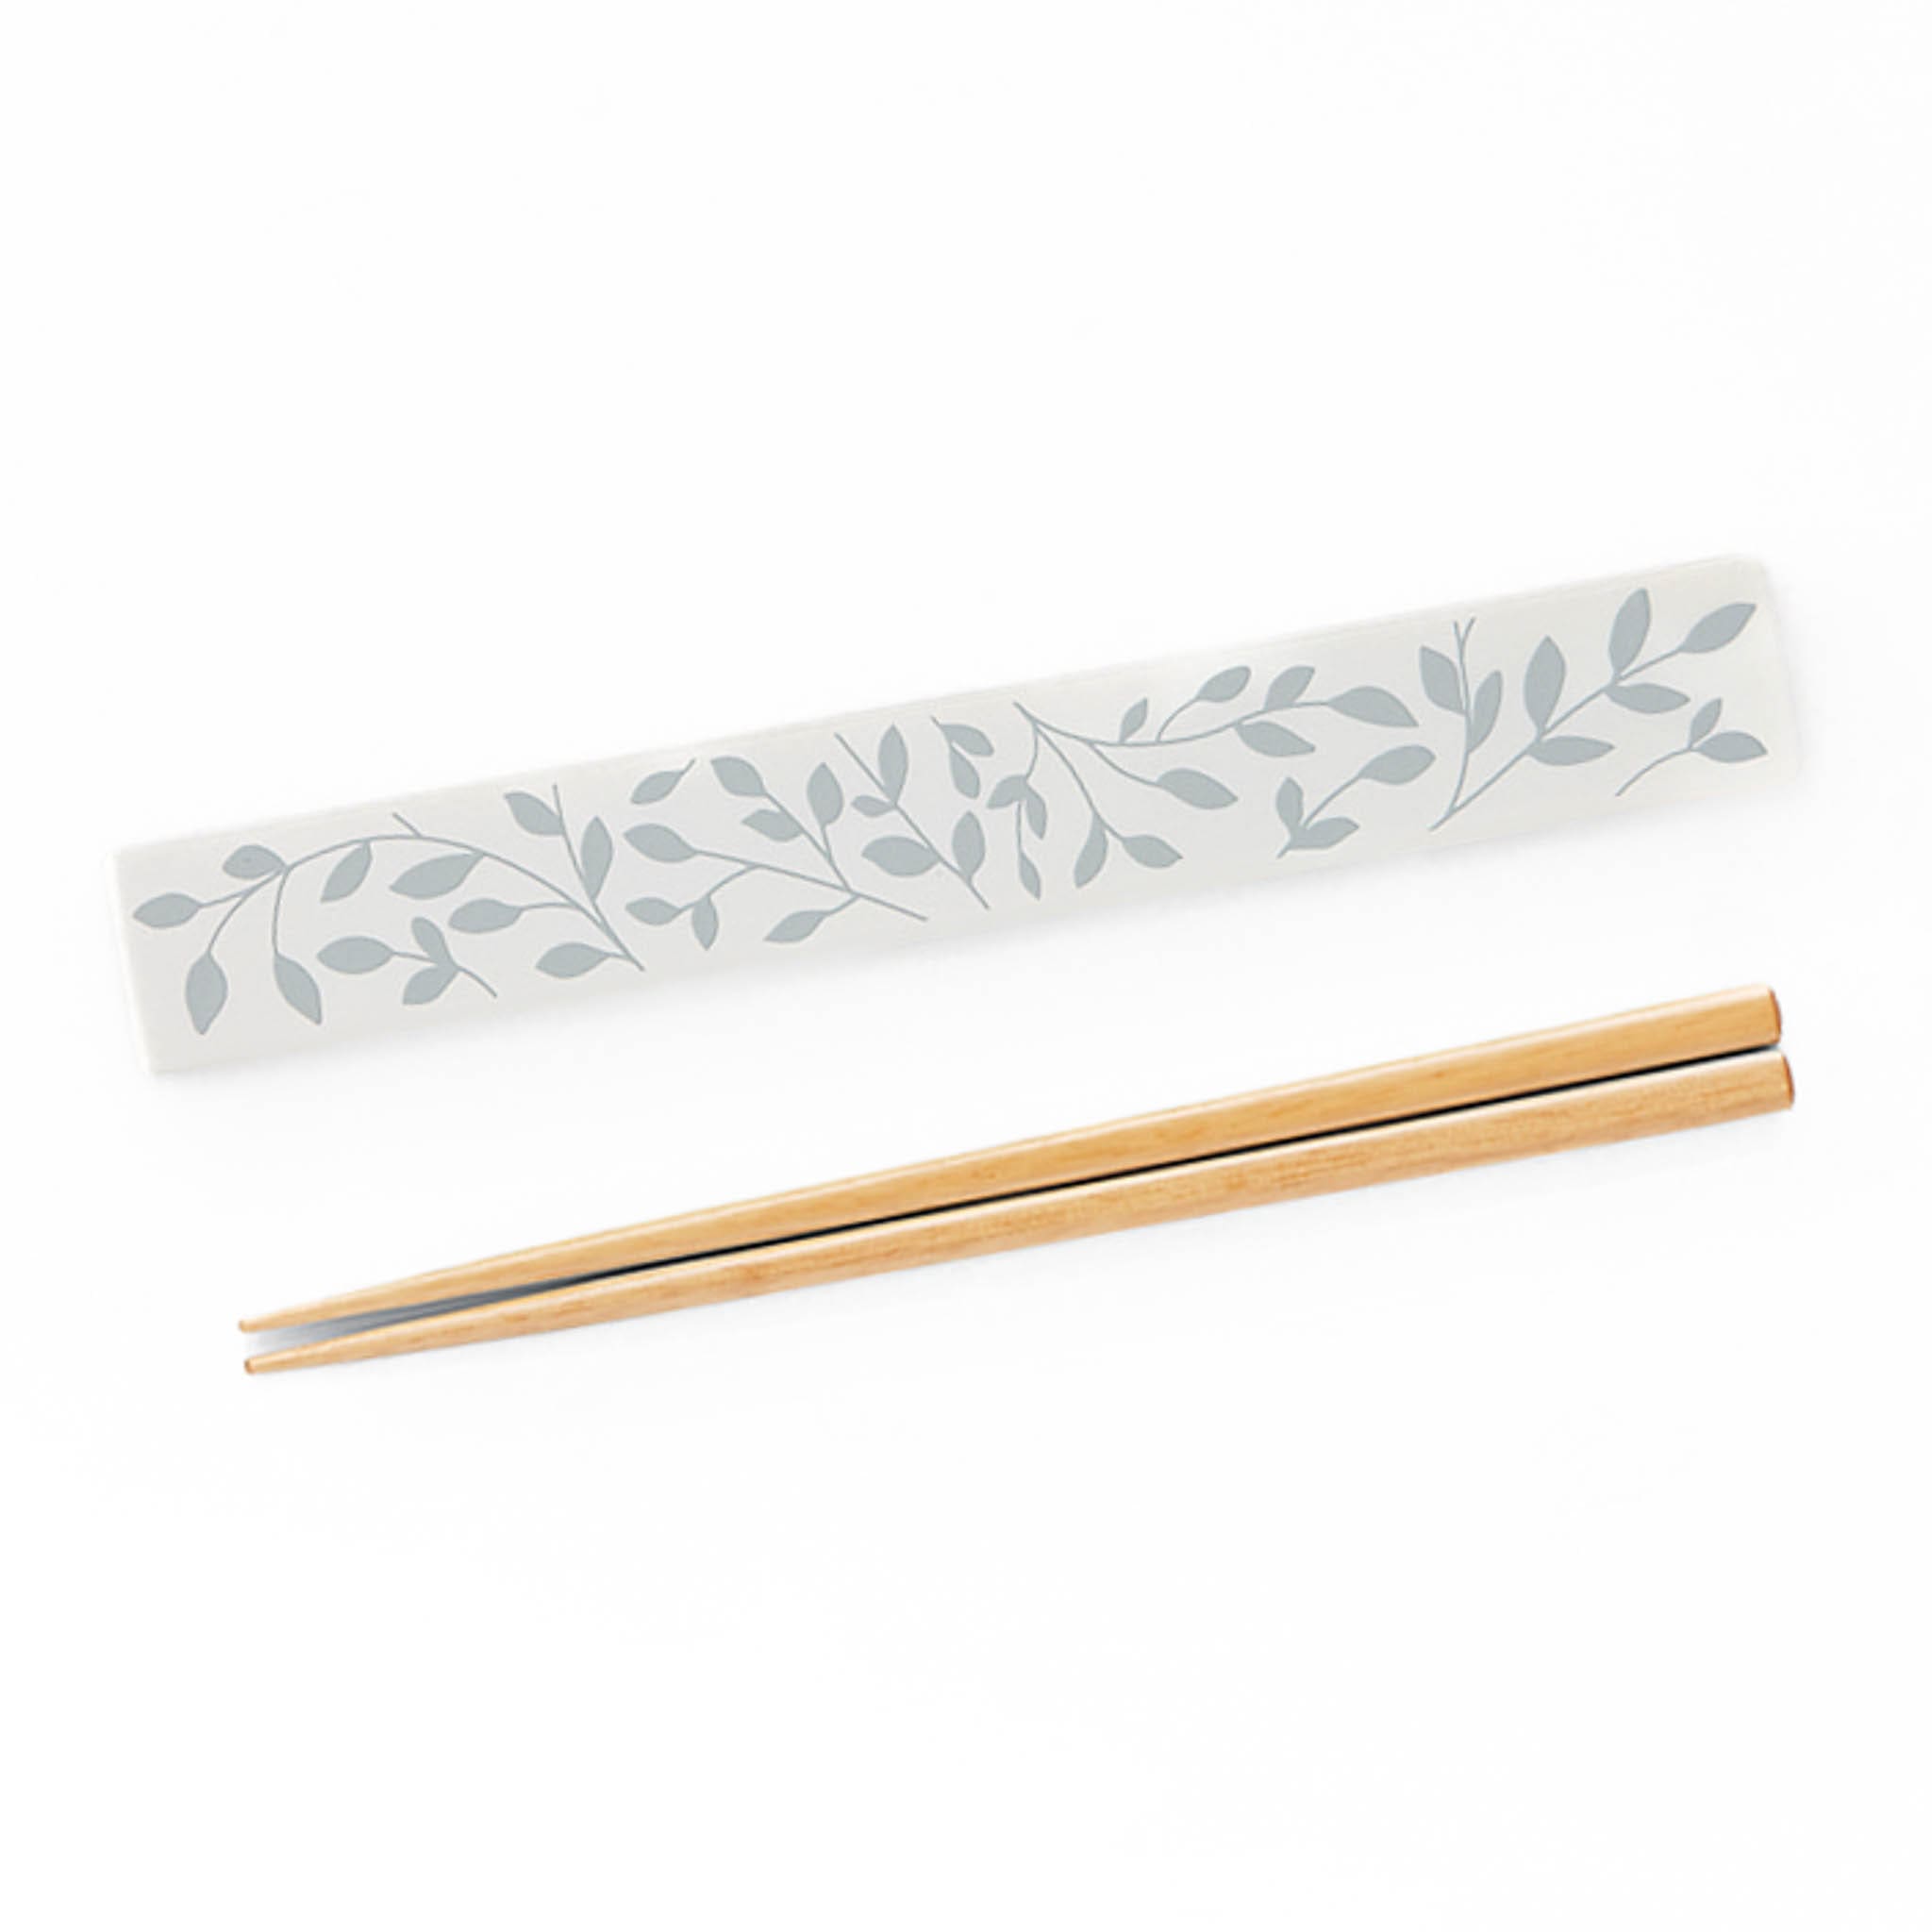 Takenaka Wooden Chopsticks in Floral White Case